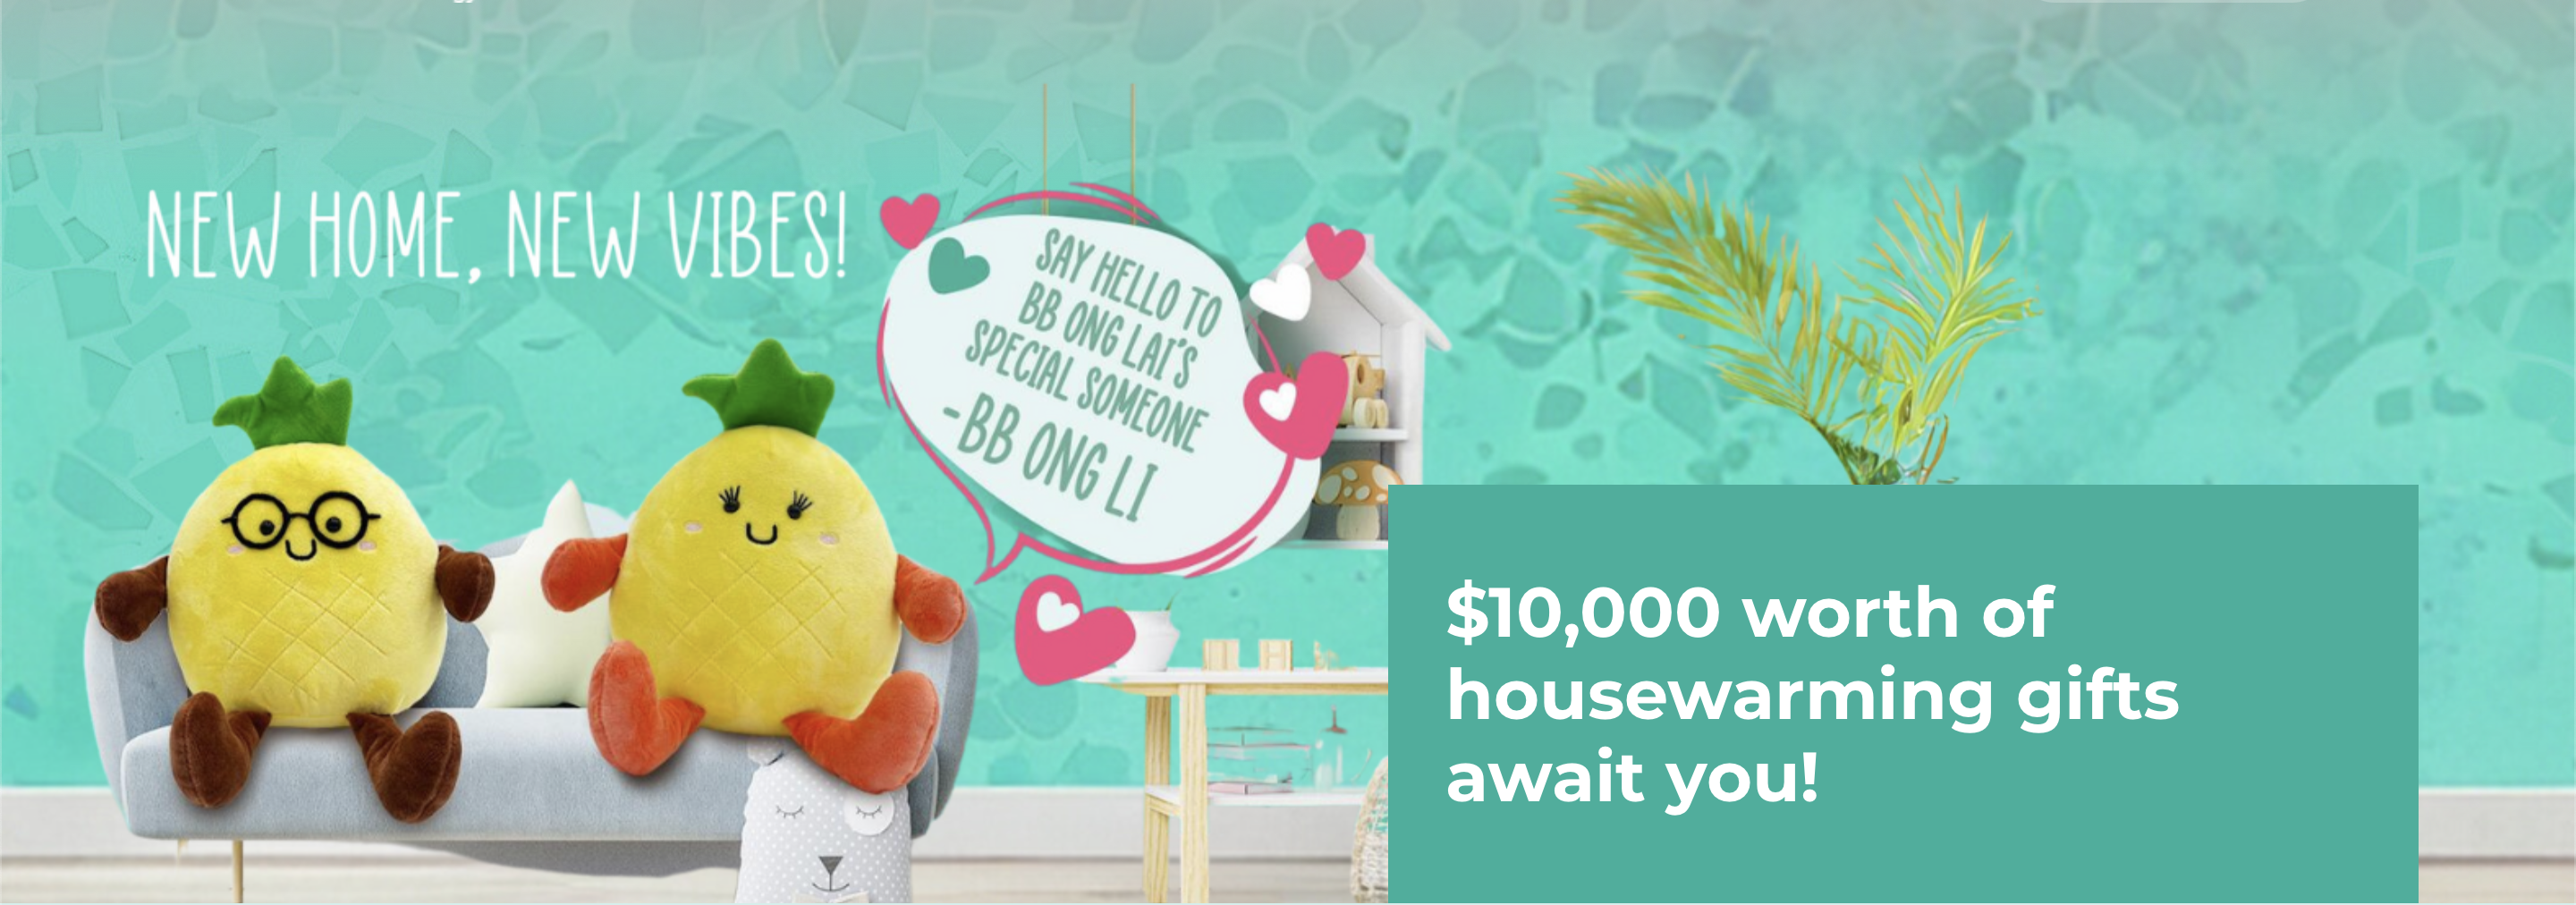 $10,000 worth of housewarming gifts await you!